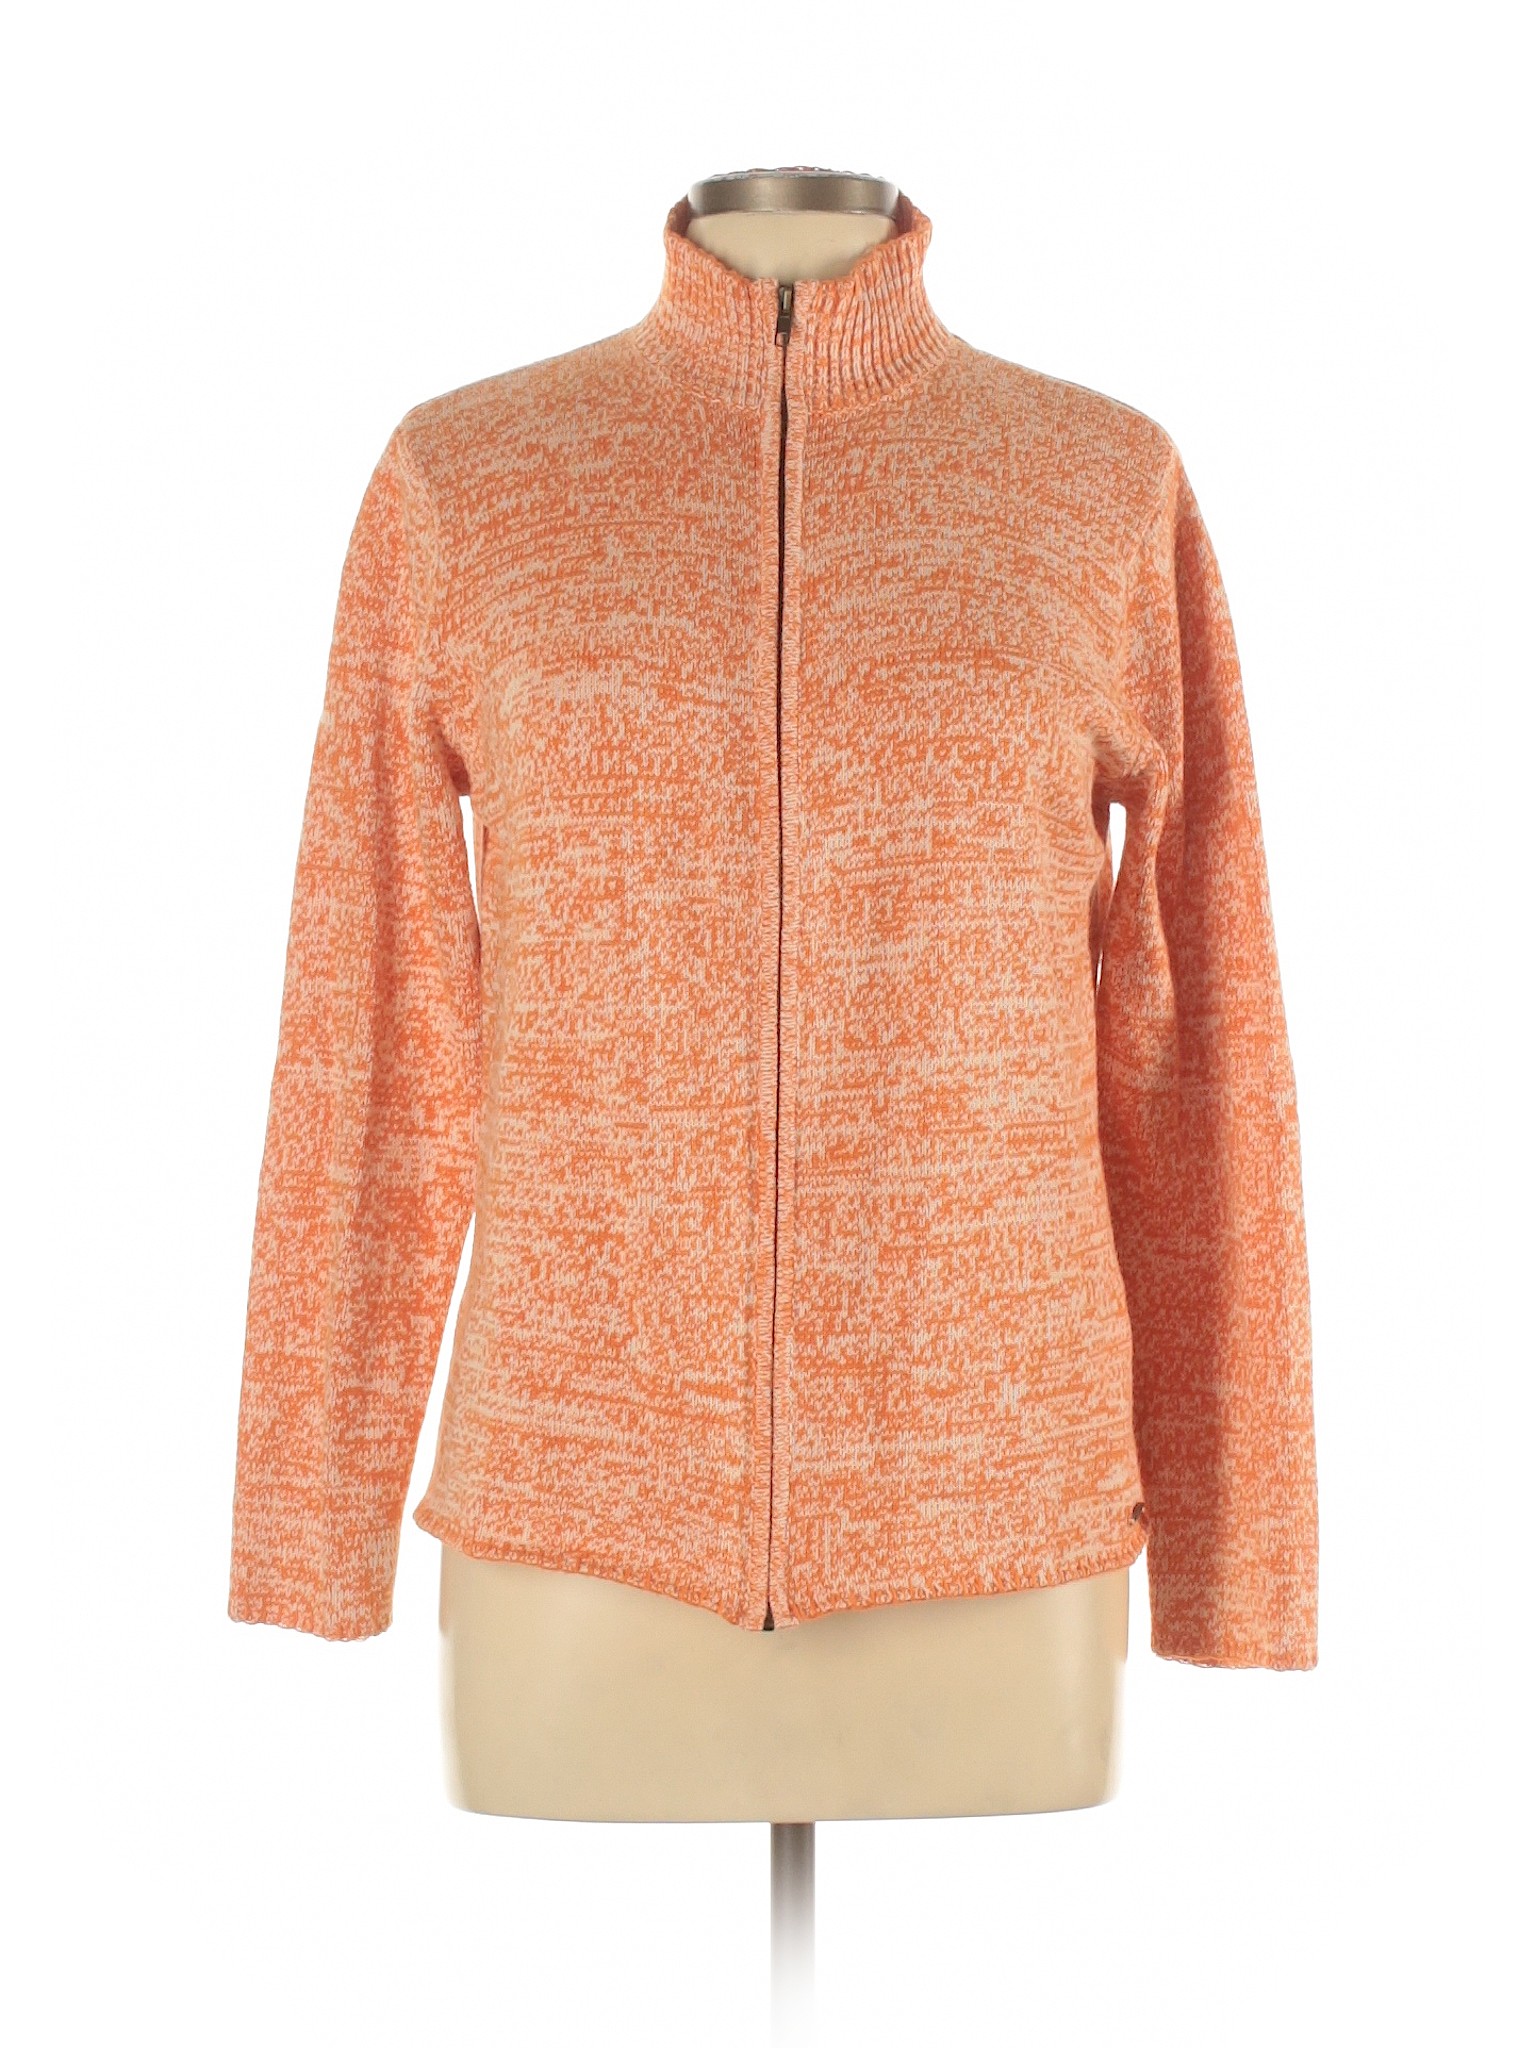 Austin Reed Women Orange Jacket L | eBay